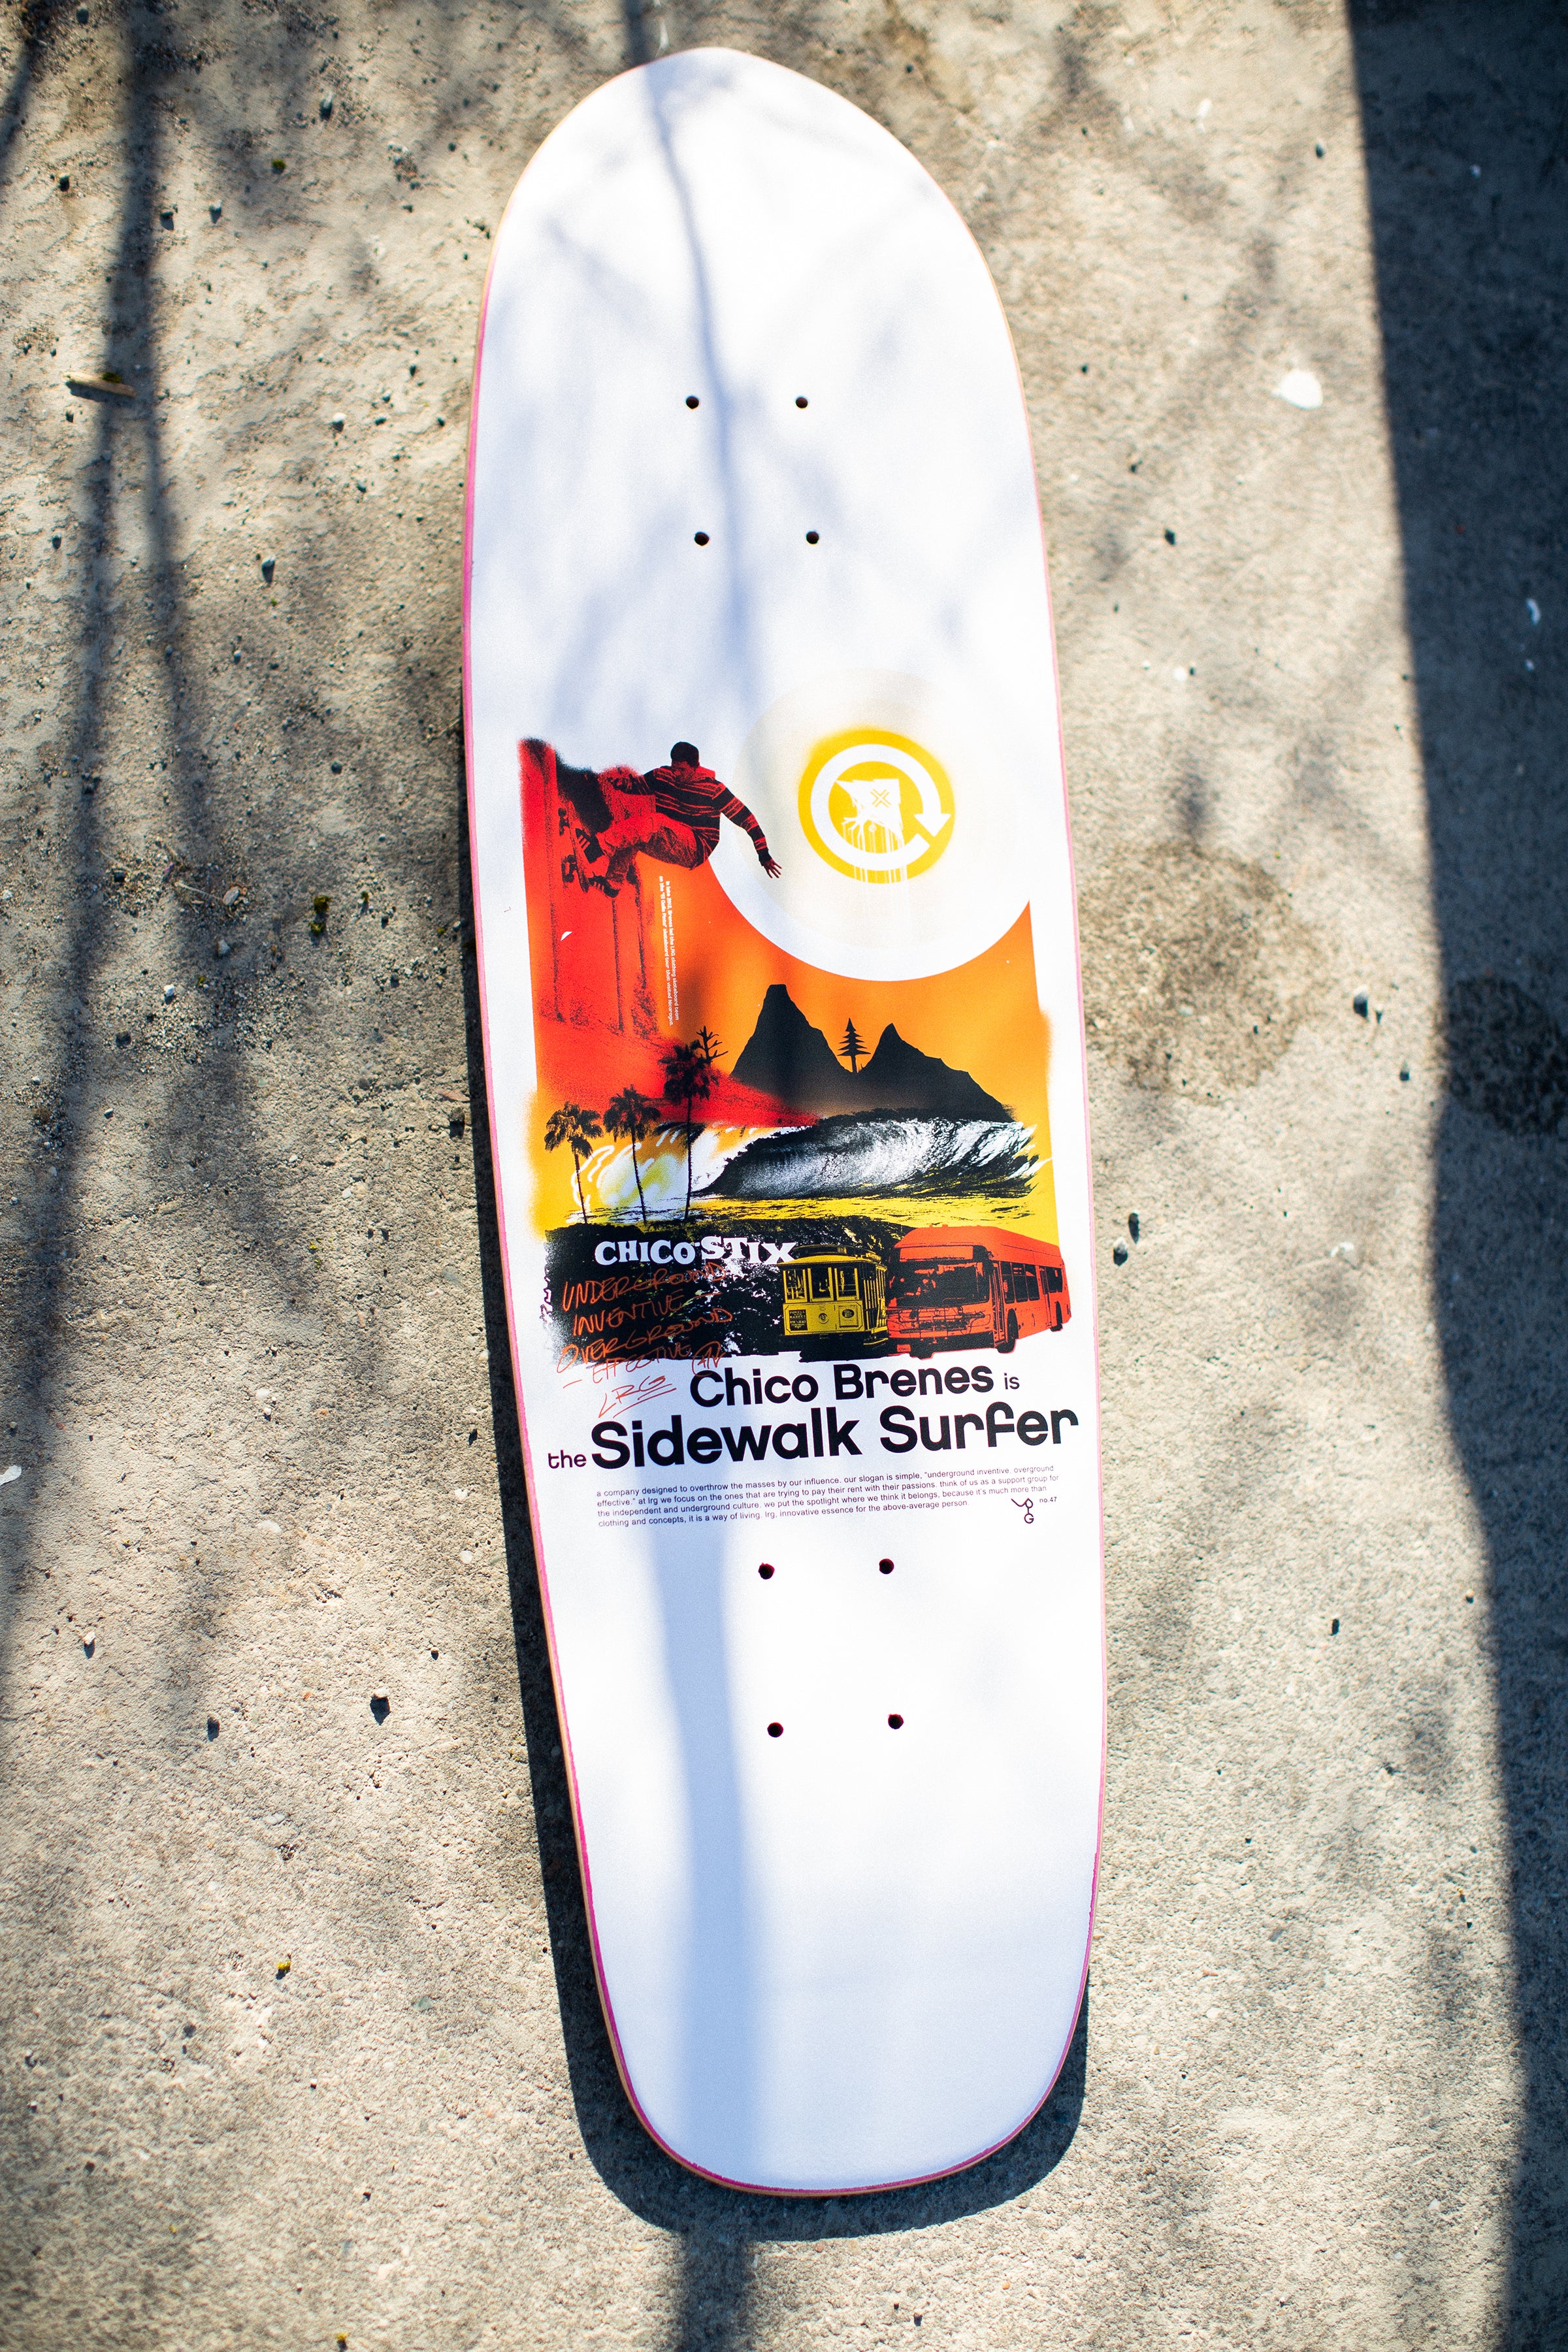 lrgclothing x Chico Stix Sidewalk Surfer tees & 8.5” Cruiser Now Available.  CHICOSTIX.COM 📷 @meckycreus